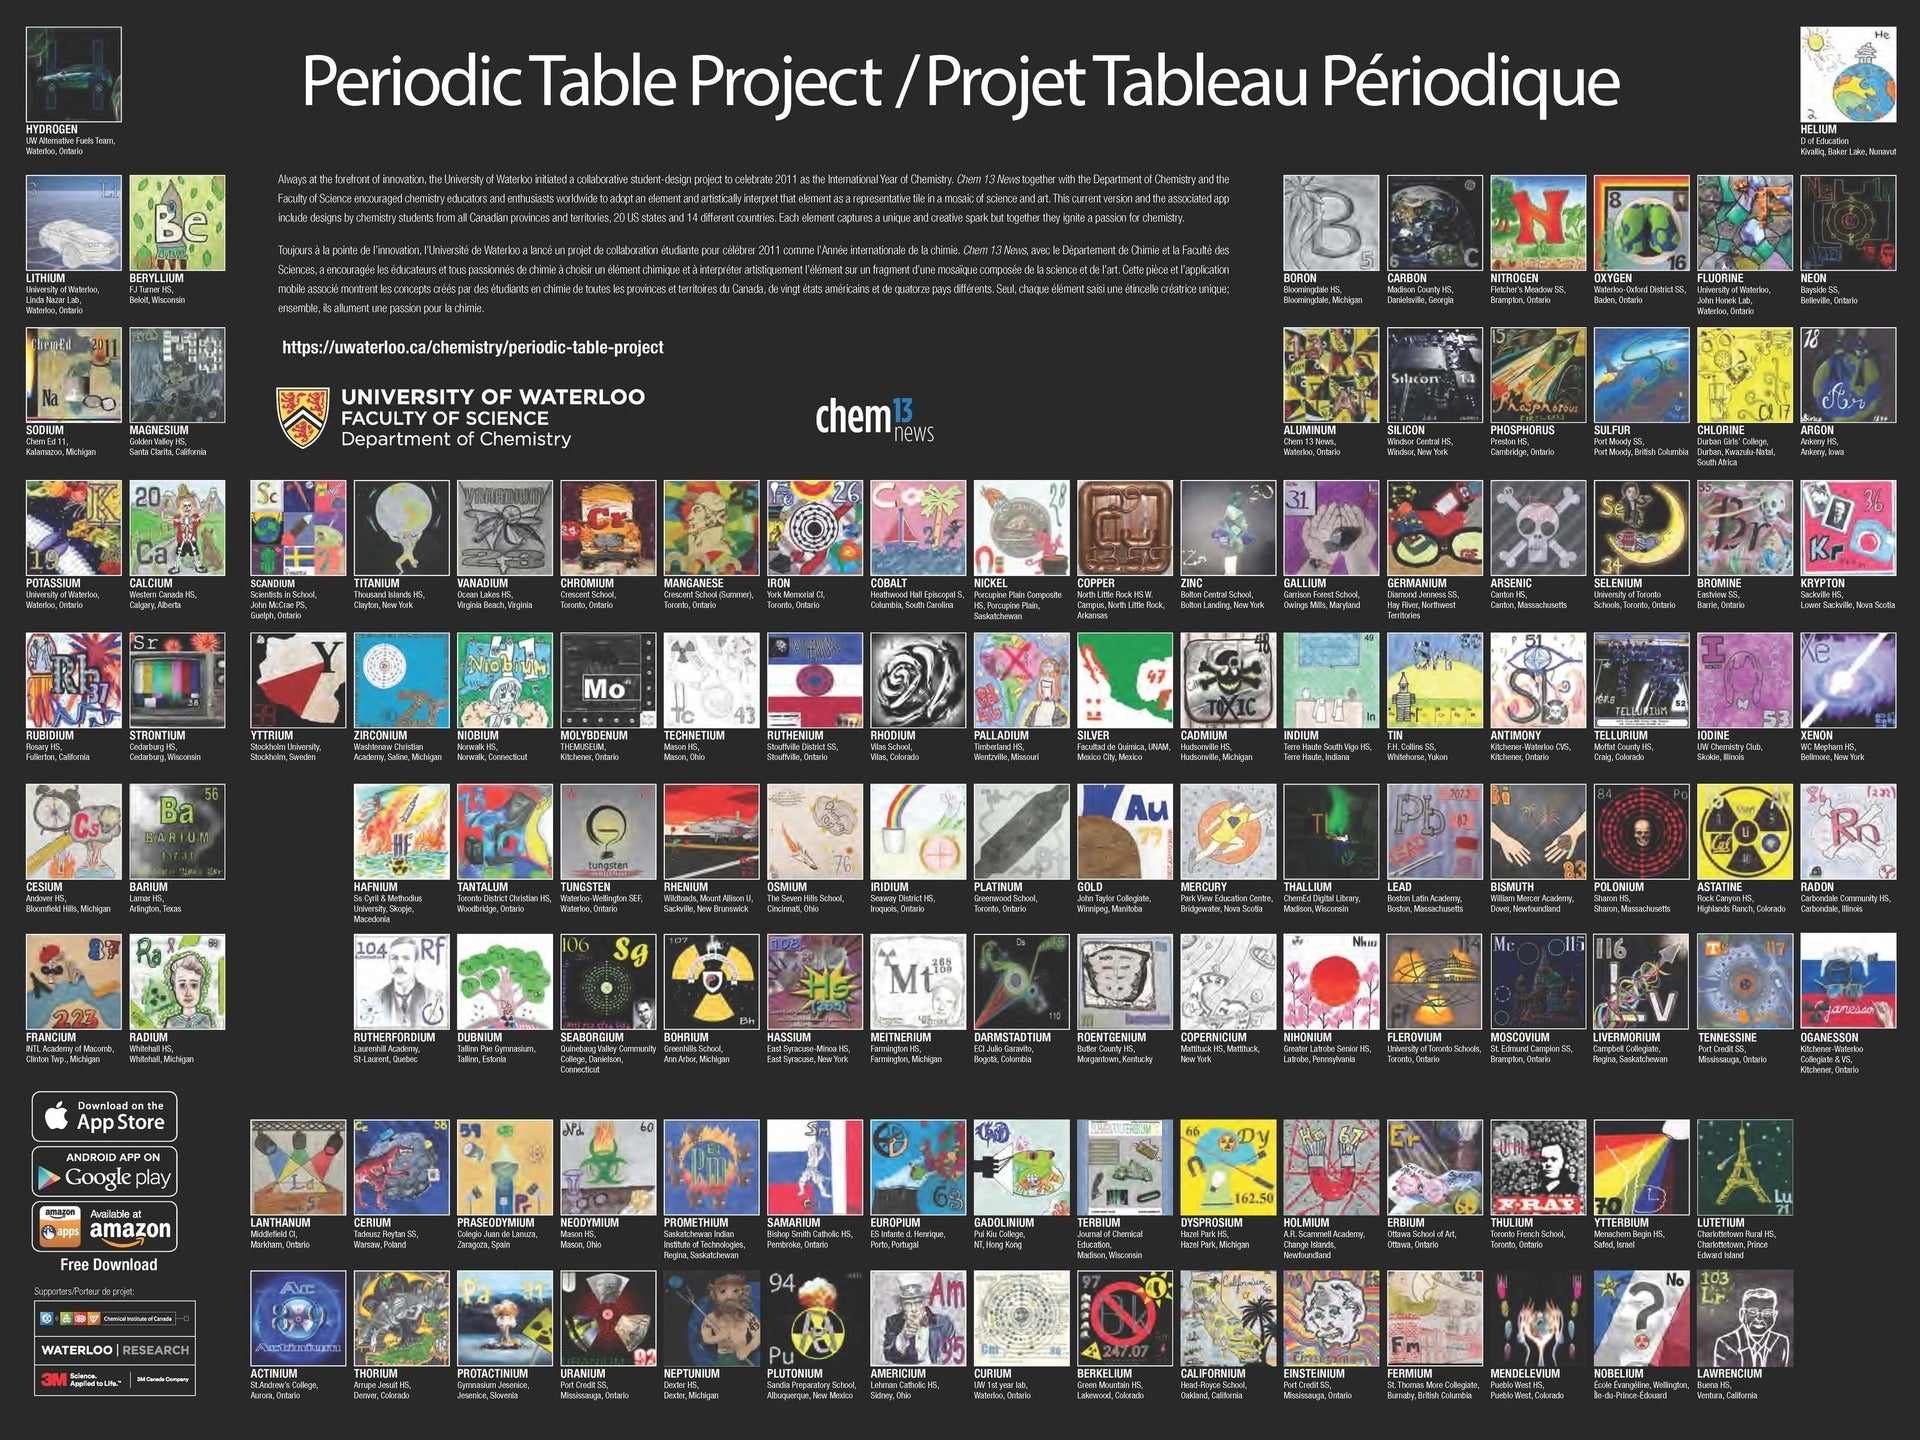 Periodic Table Project / Projet Tableau Périodique